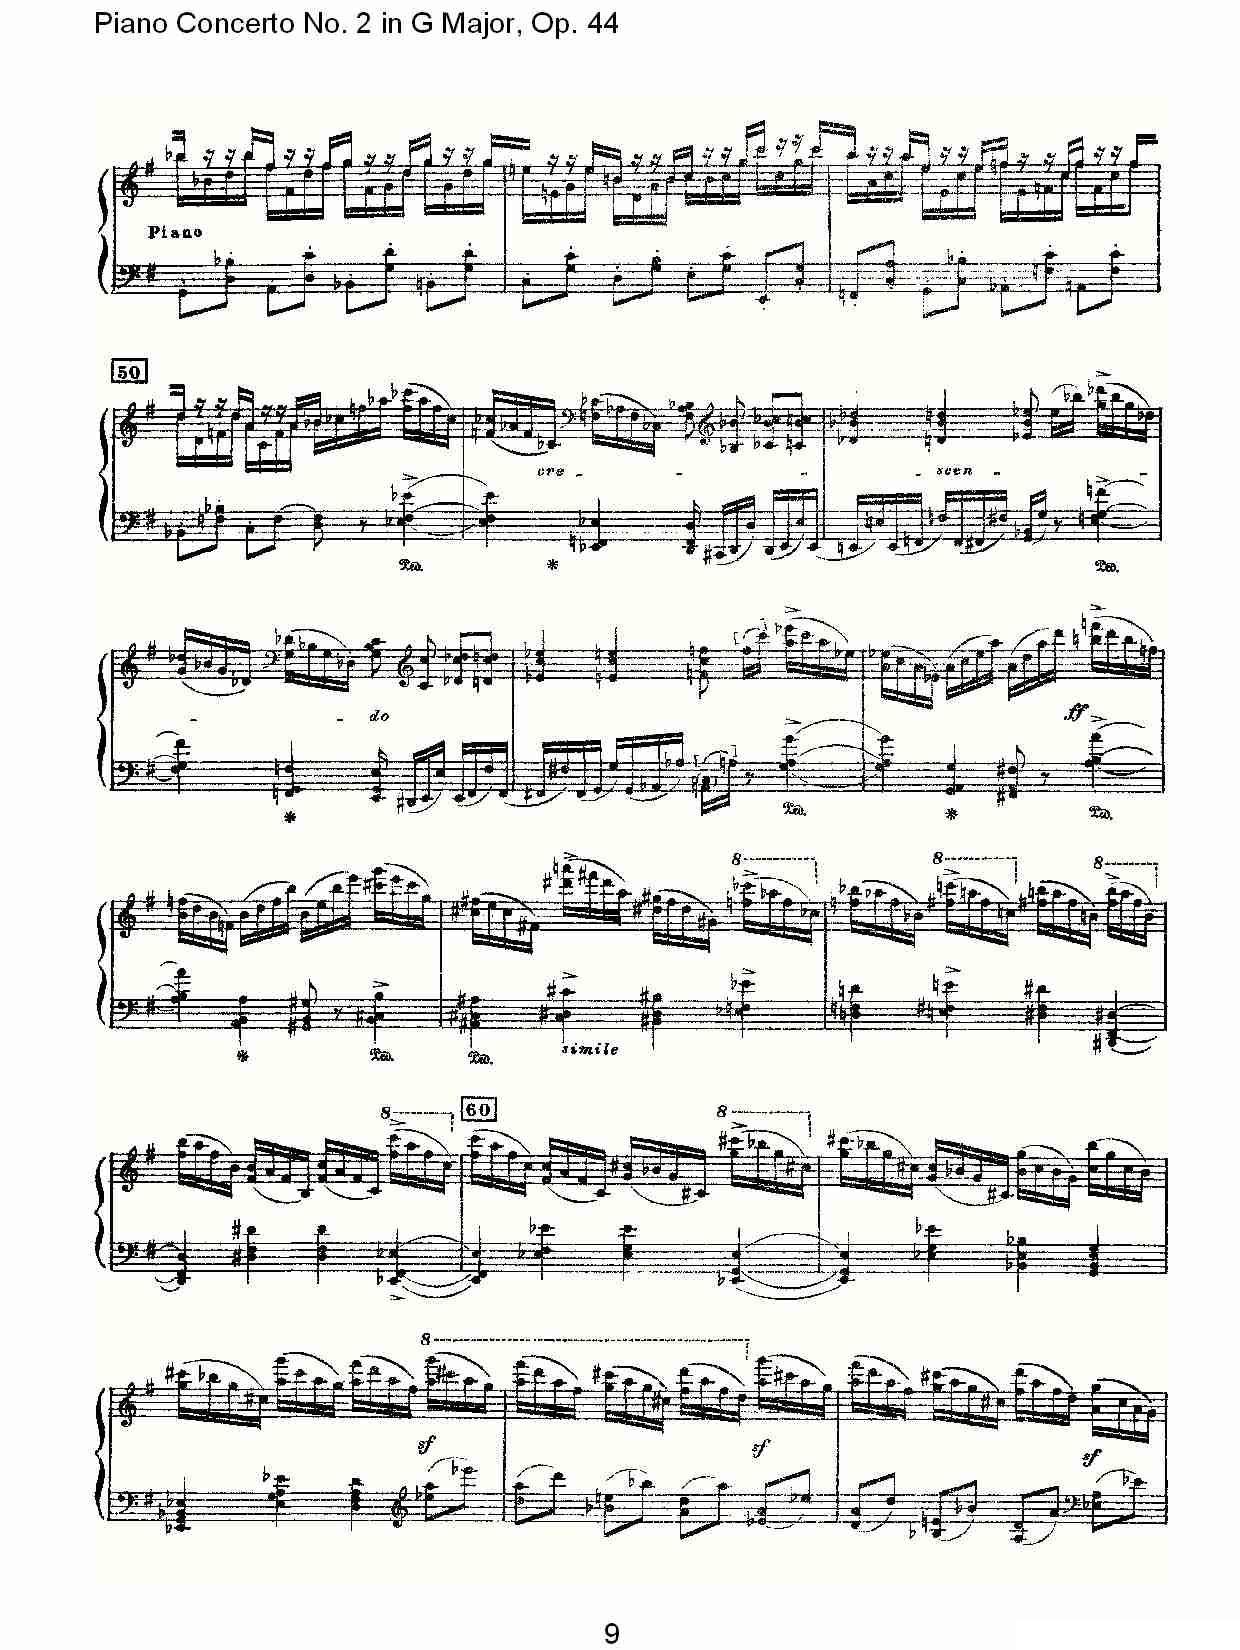 G大调第二钢琴协奏曲, Op.44第一乐章（一）钢琴曲谱（图9）